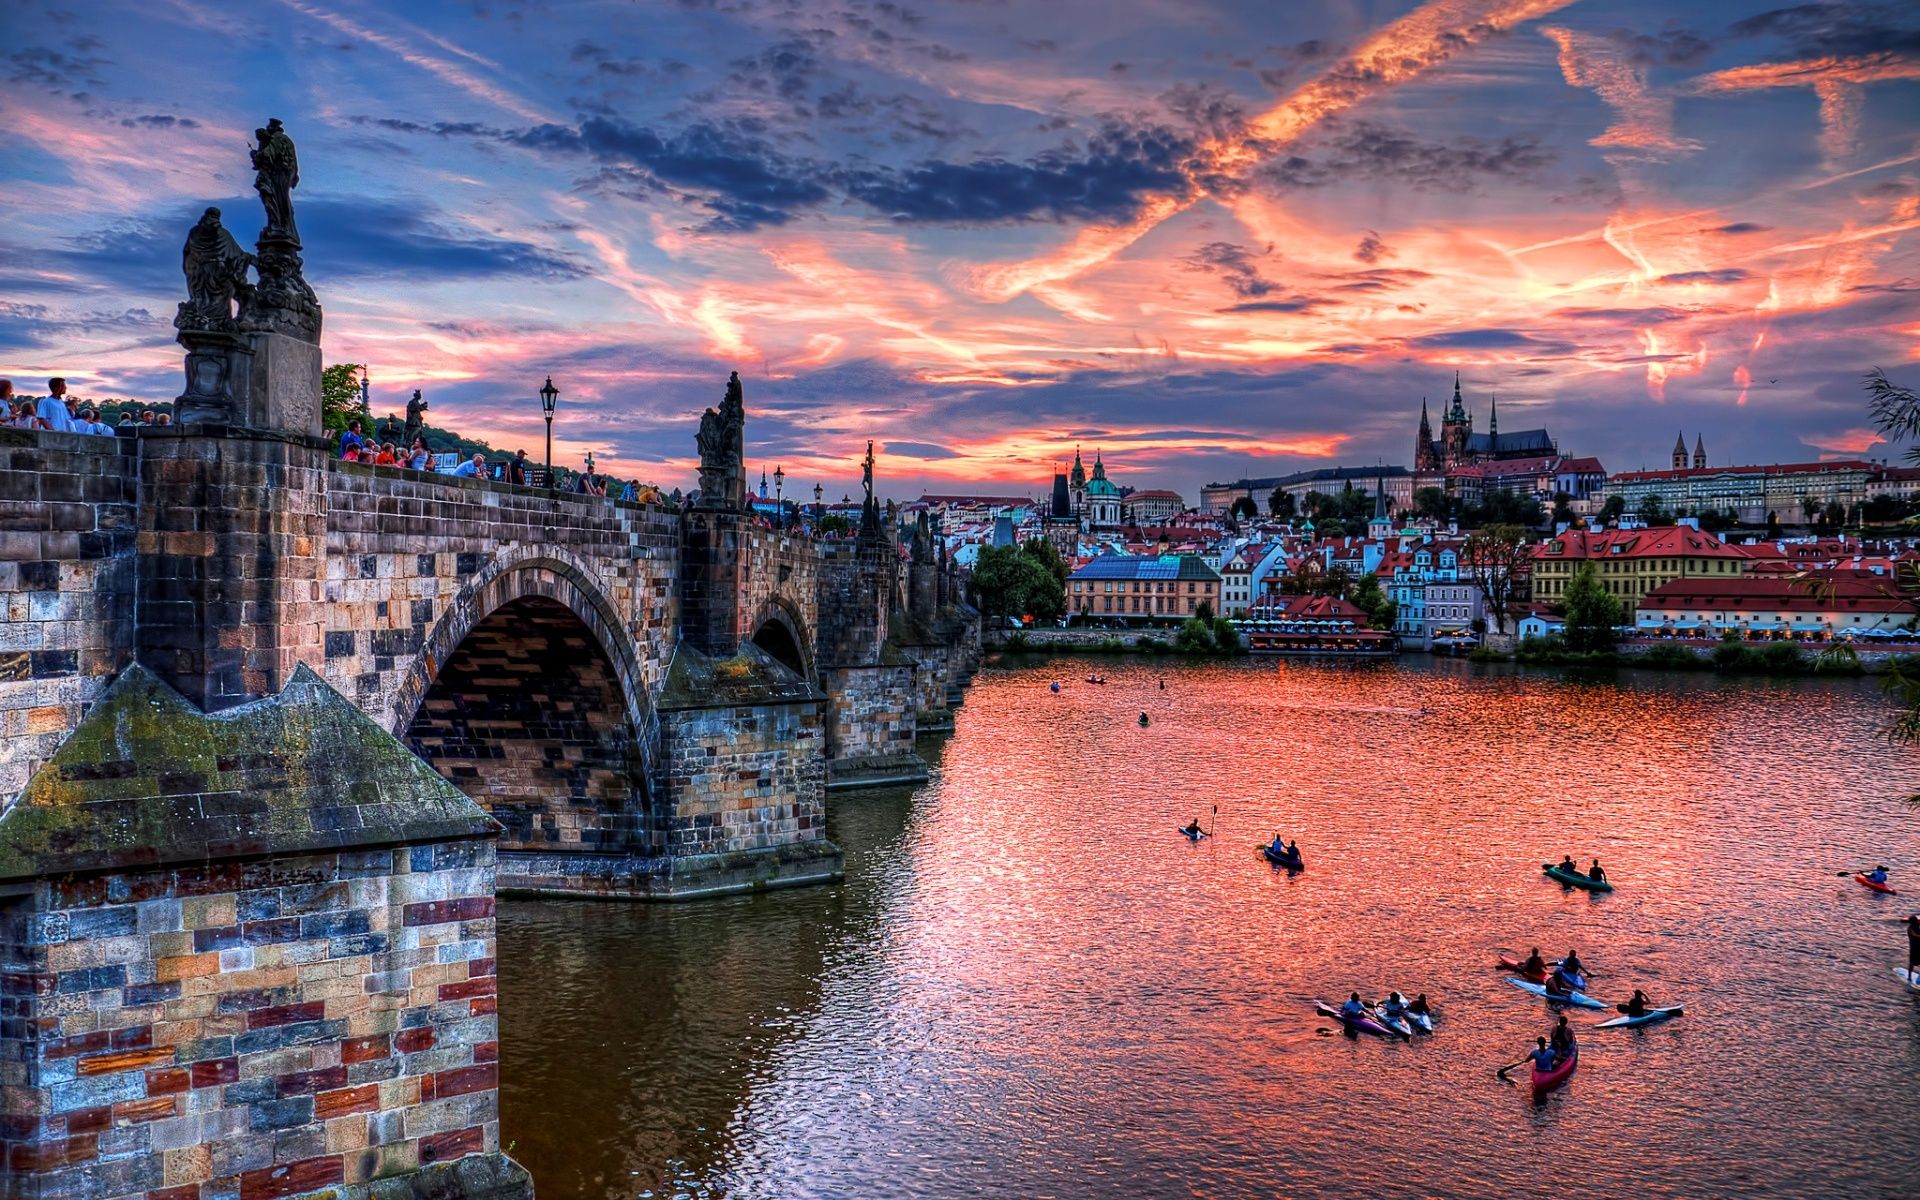 Find out: Sunset Prague City wallpaper on http://hdpicorner.com ...